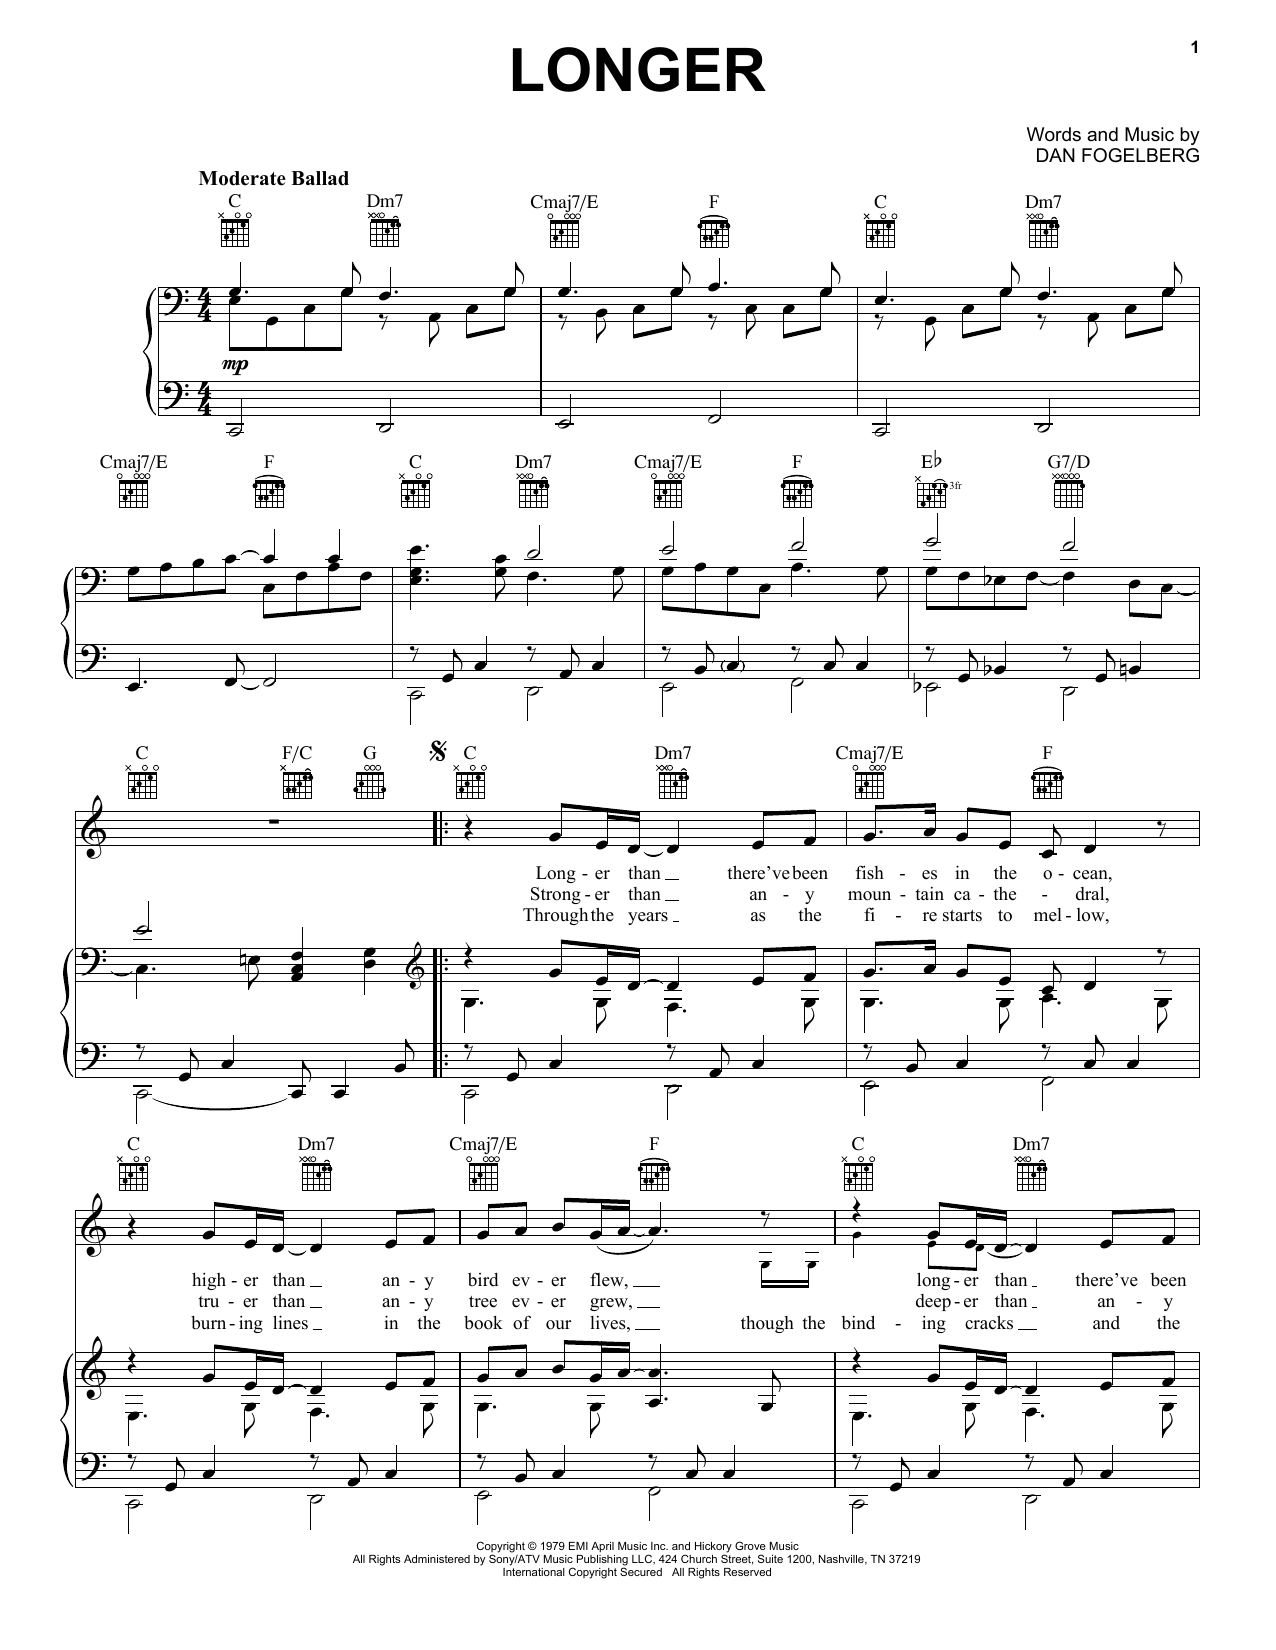 Dan Fogelberg Longer Sheet Music Notes & Chords for Trombone Solo - Download or Print PDF